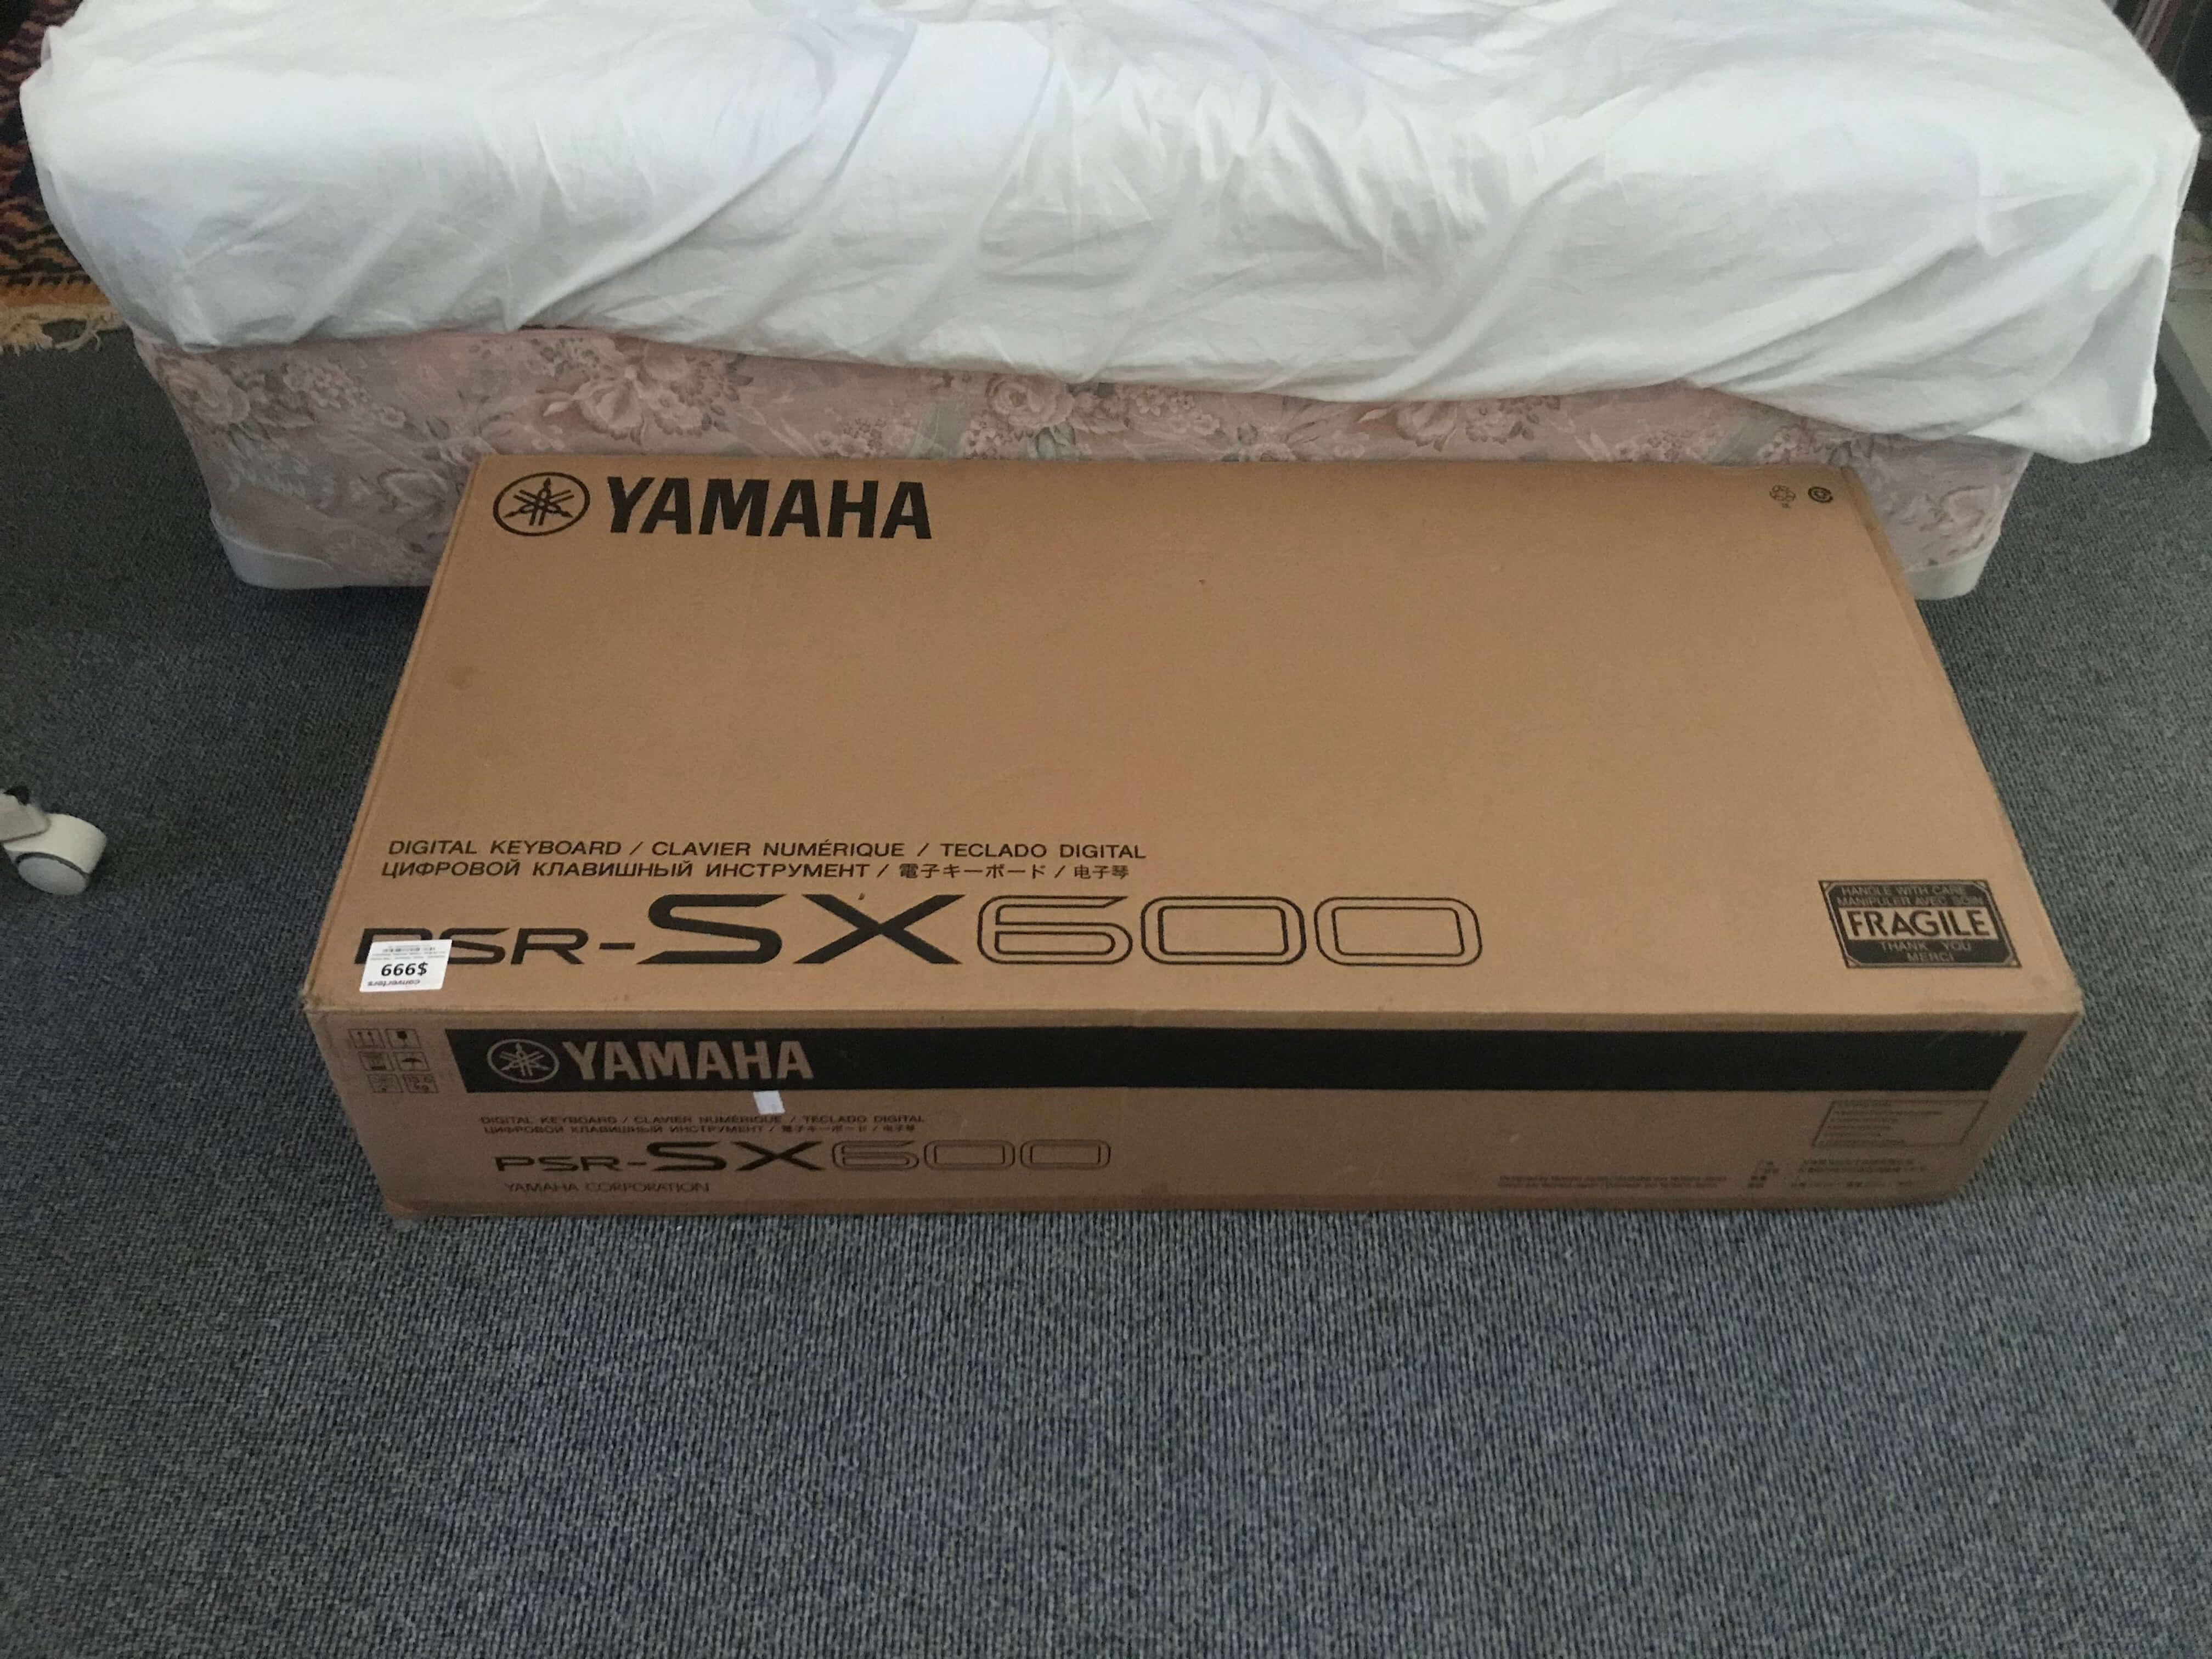 Yahama Synth Box.jpeg